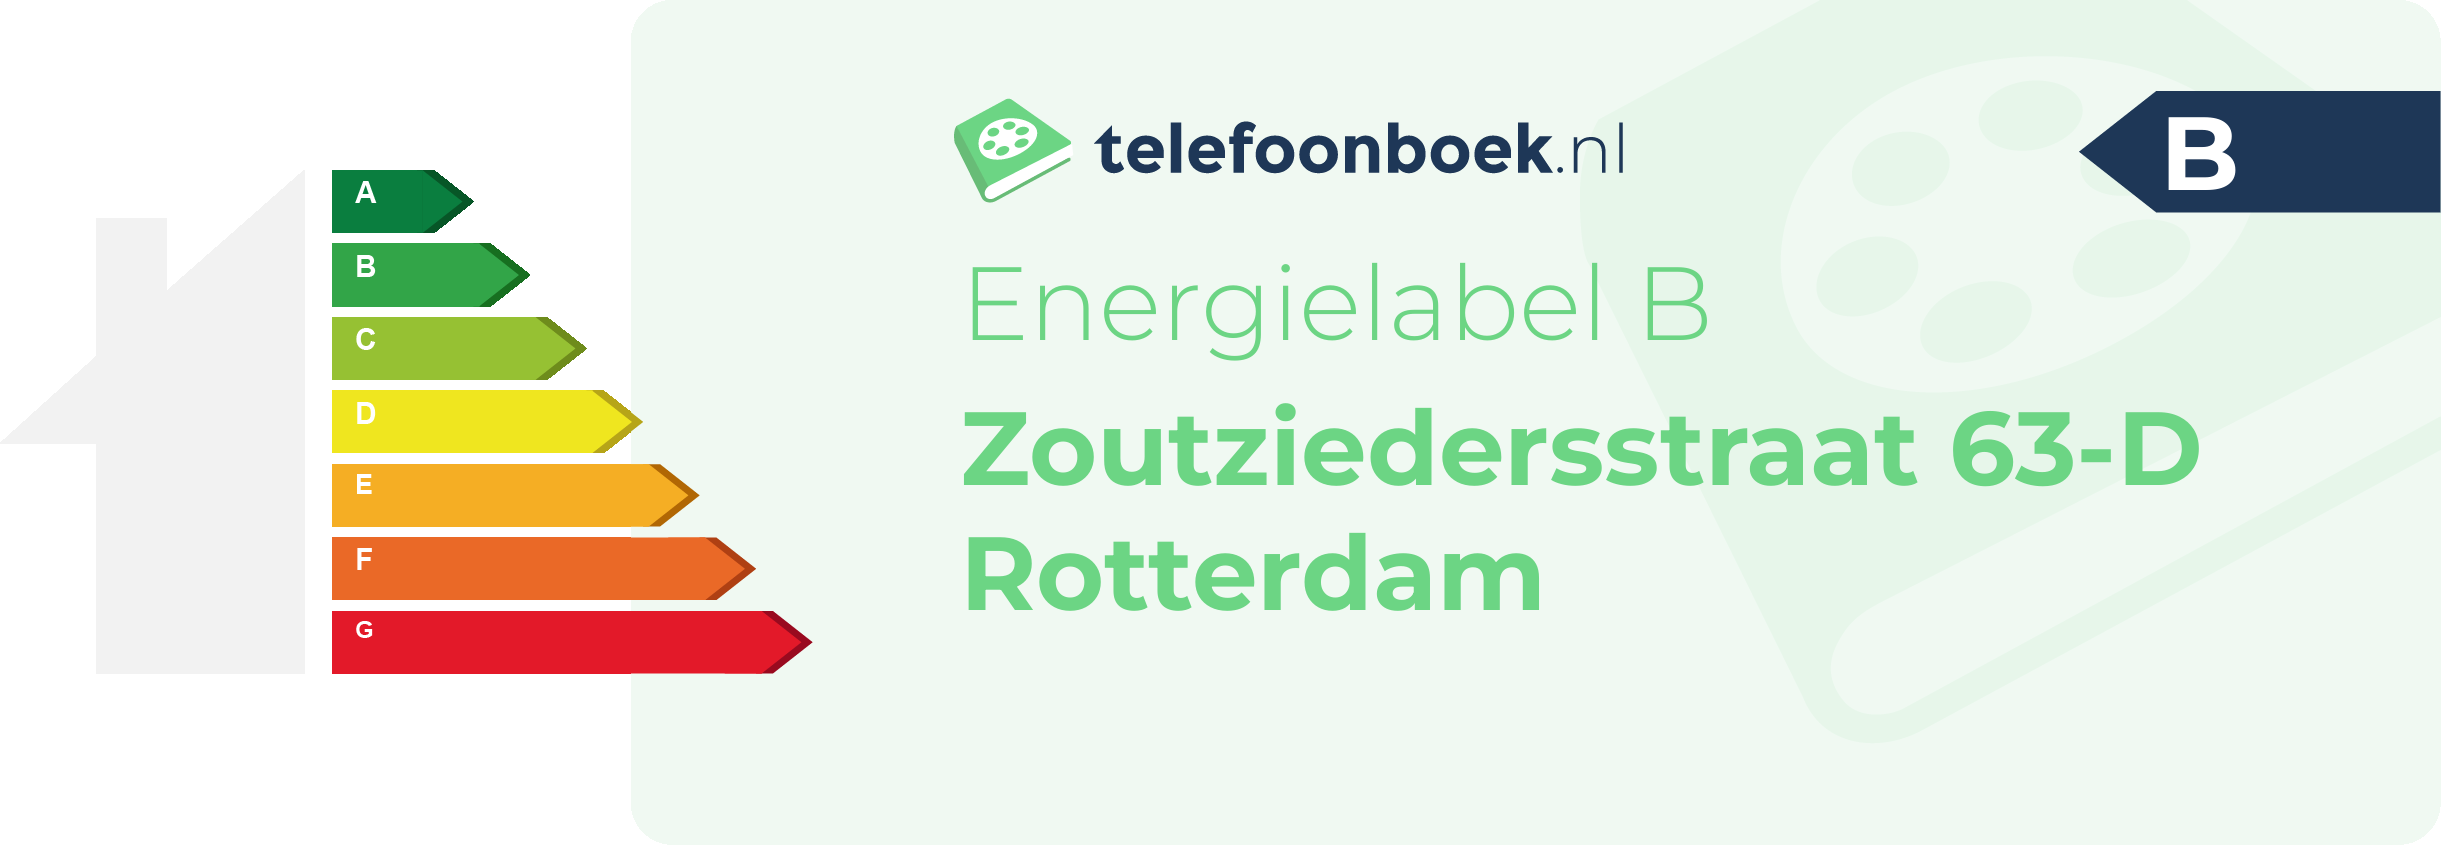 Energielabel Zoutziedersstraat 63-D Rotterdam